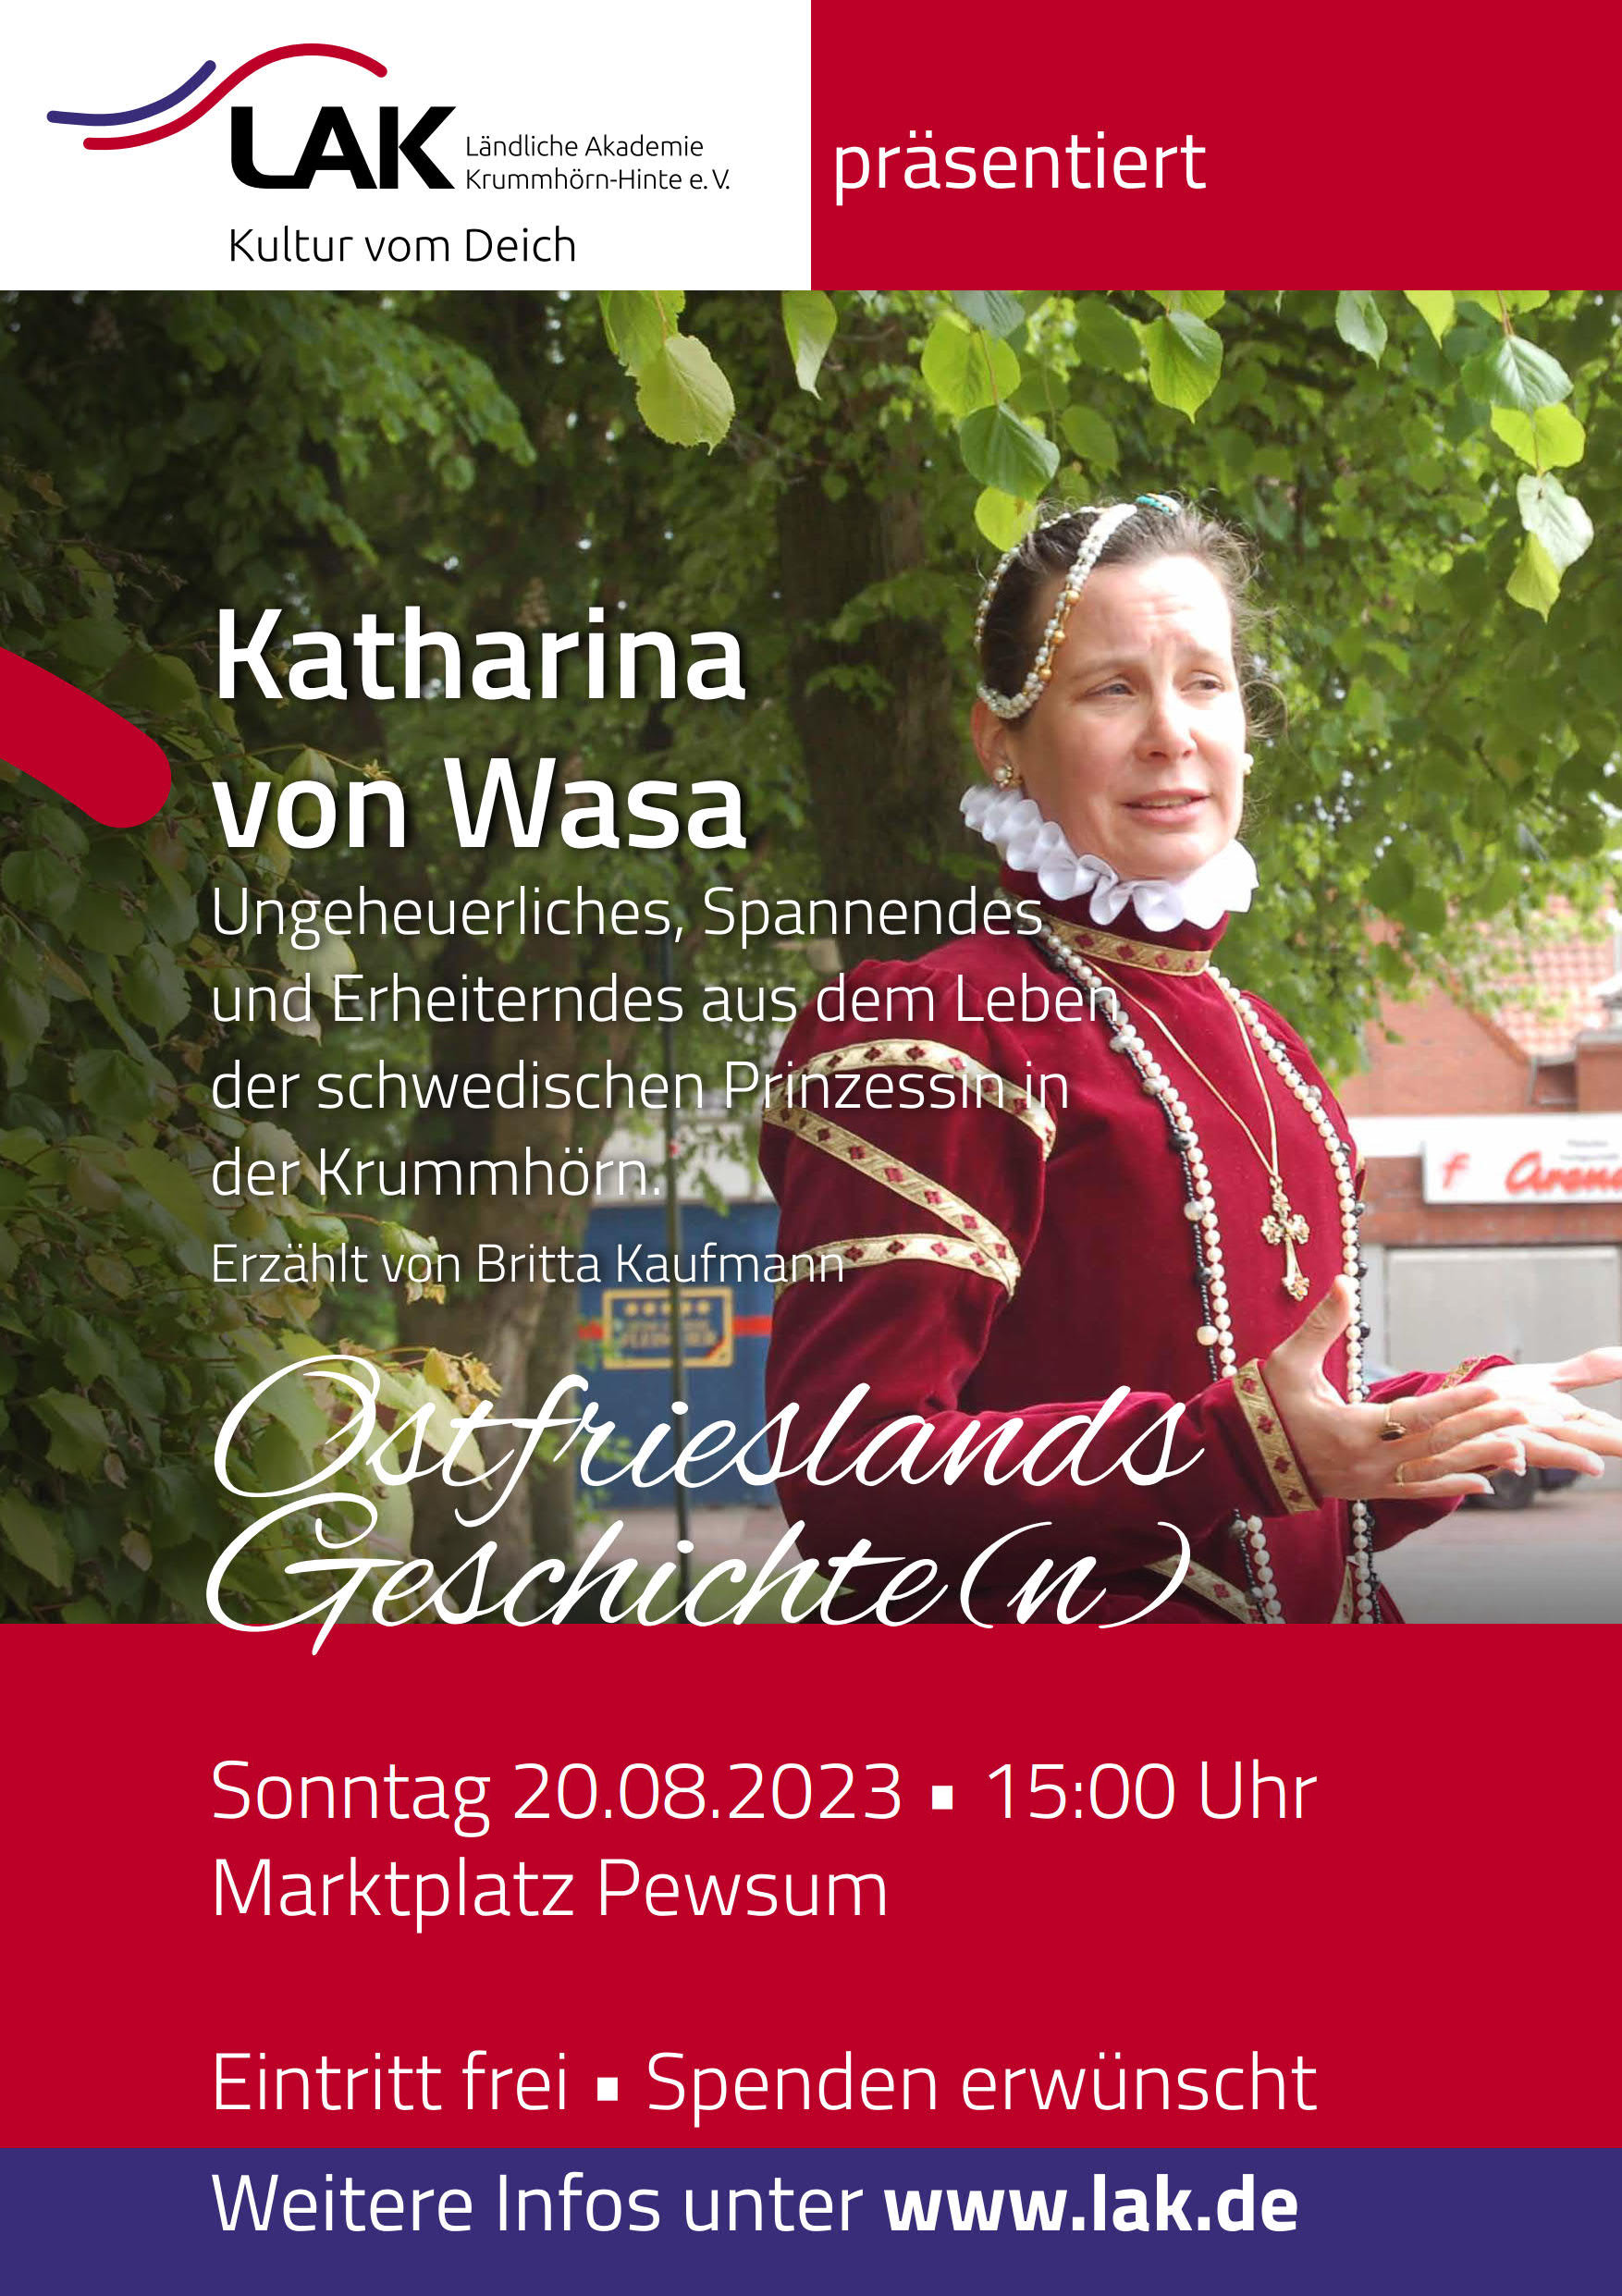 23-08-20 - Pewsum - Katharina von Wasa